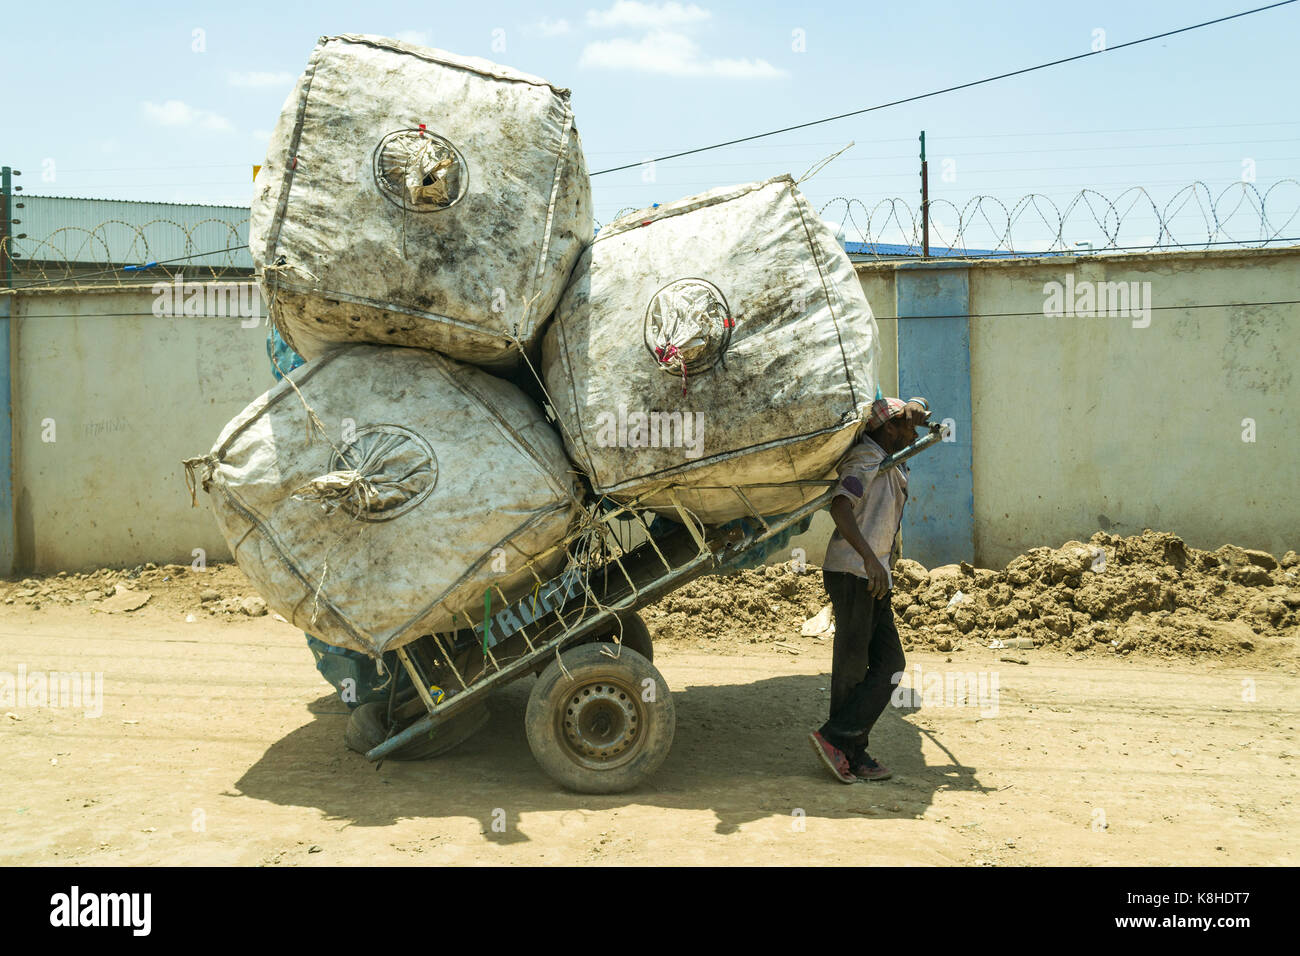 Extractor carrito de mano está descansando en la sombra de enormes sacos llenos de plástico para reciclar, Nairobi, Kenia Foto de stock